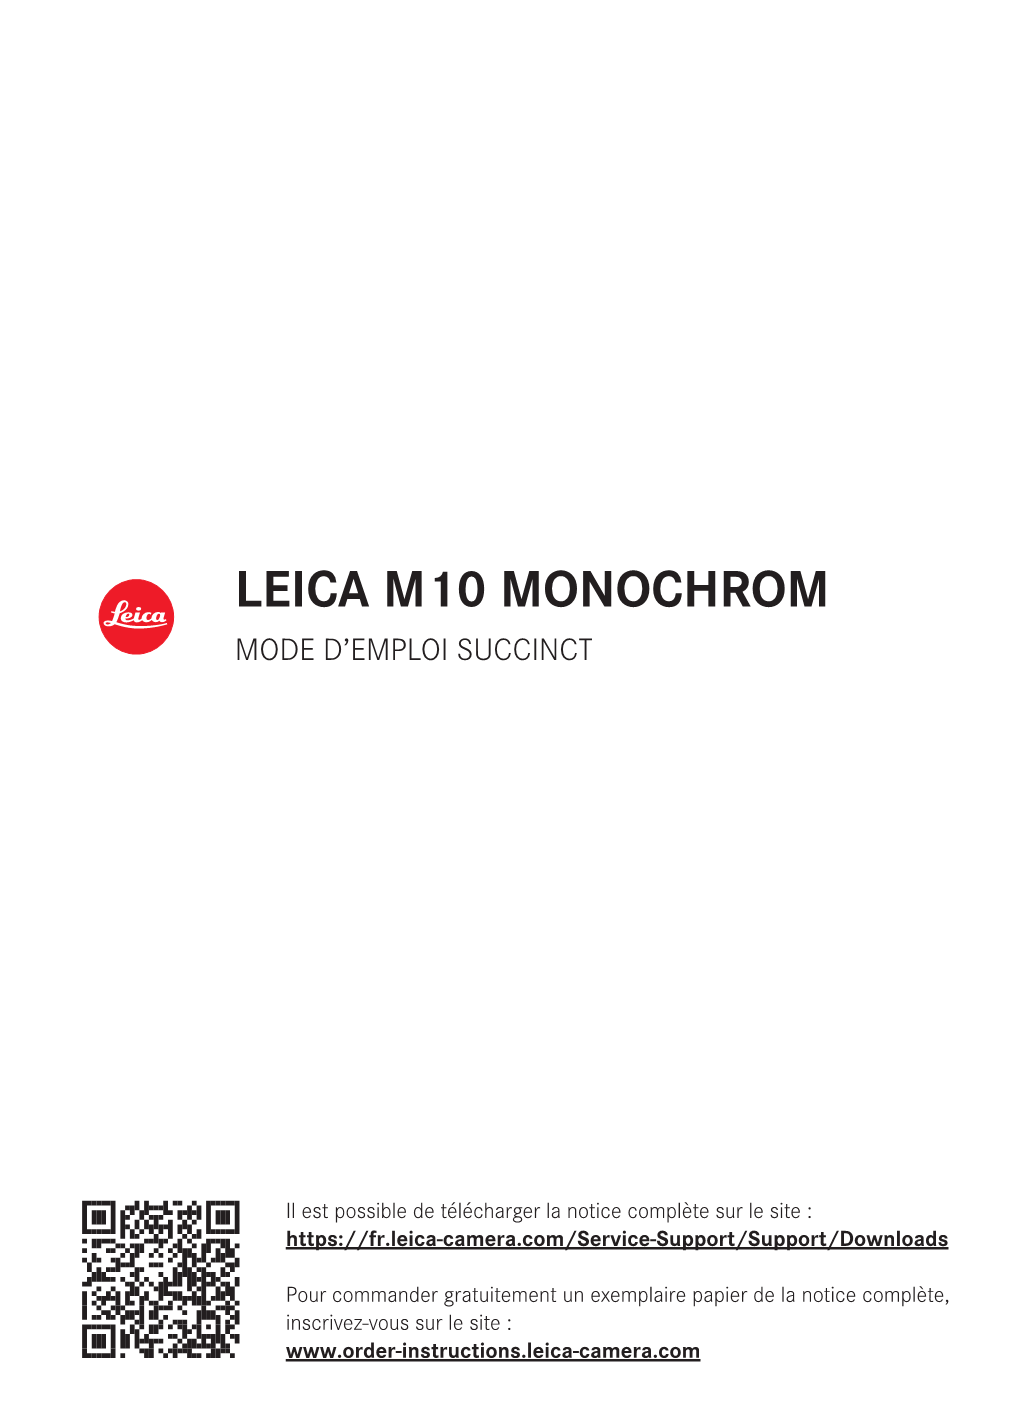 Leica M10 Monochrom Mode D’Emploi Succinct